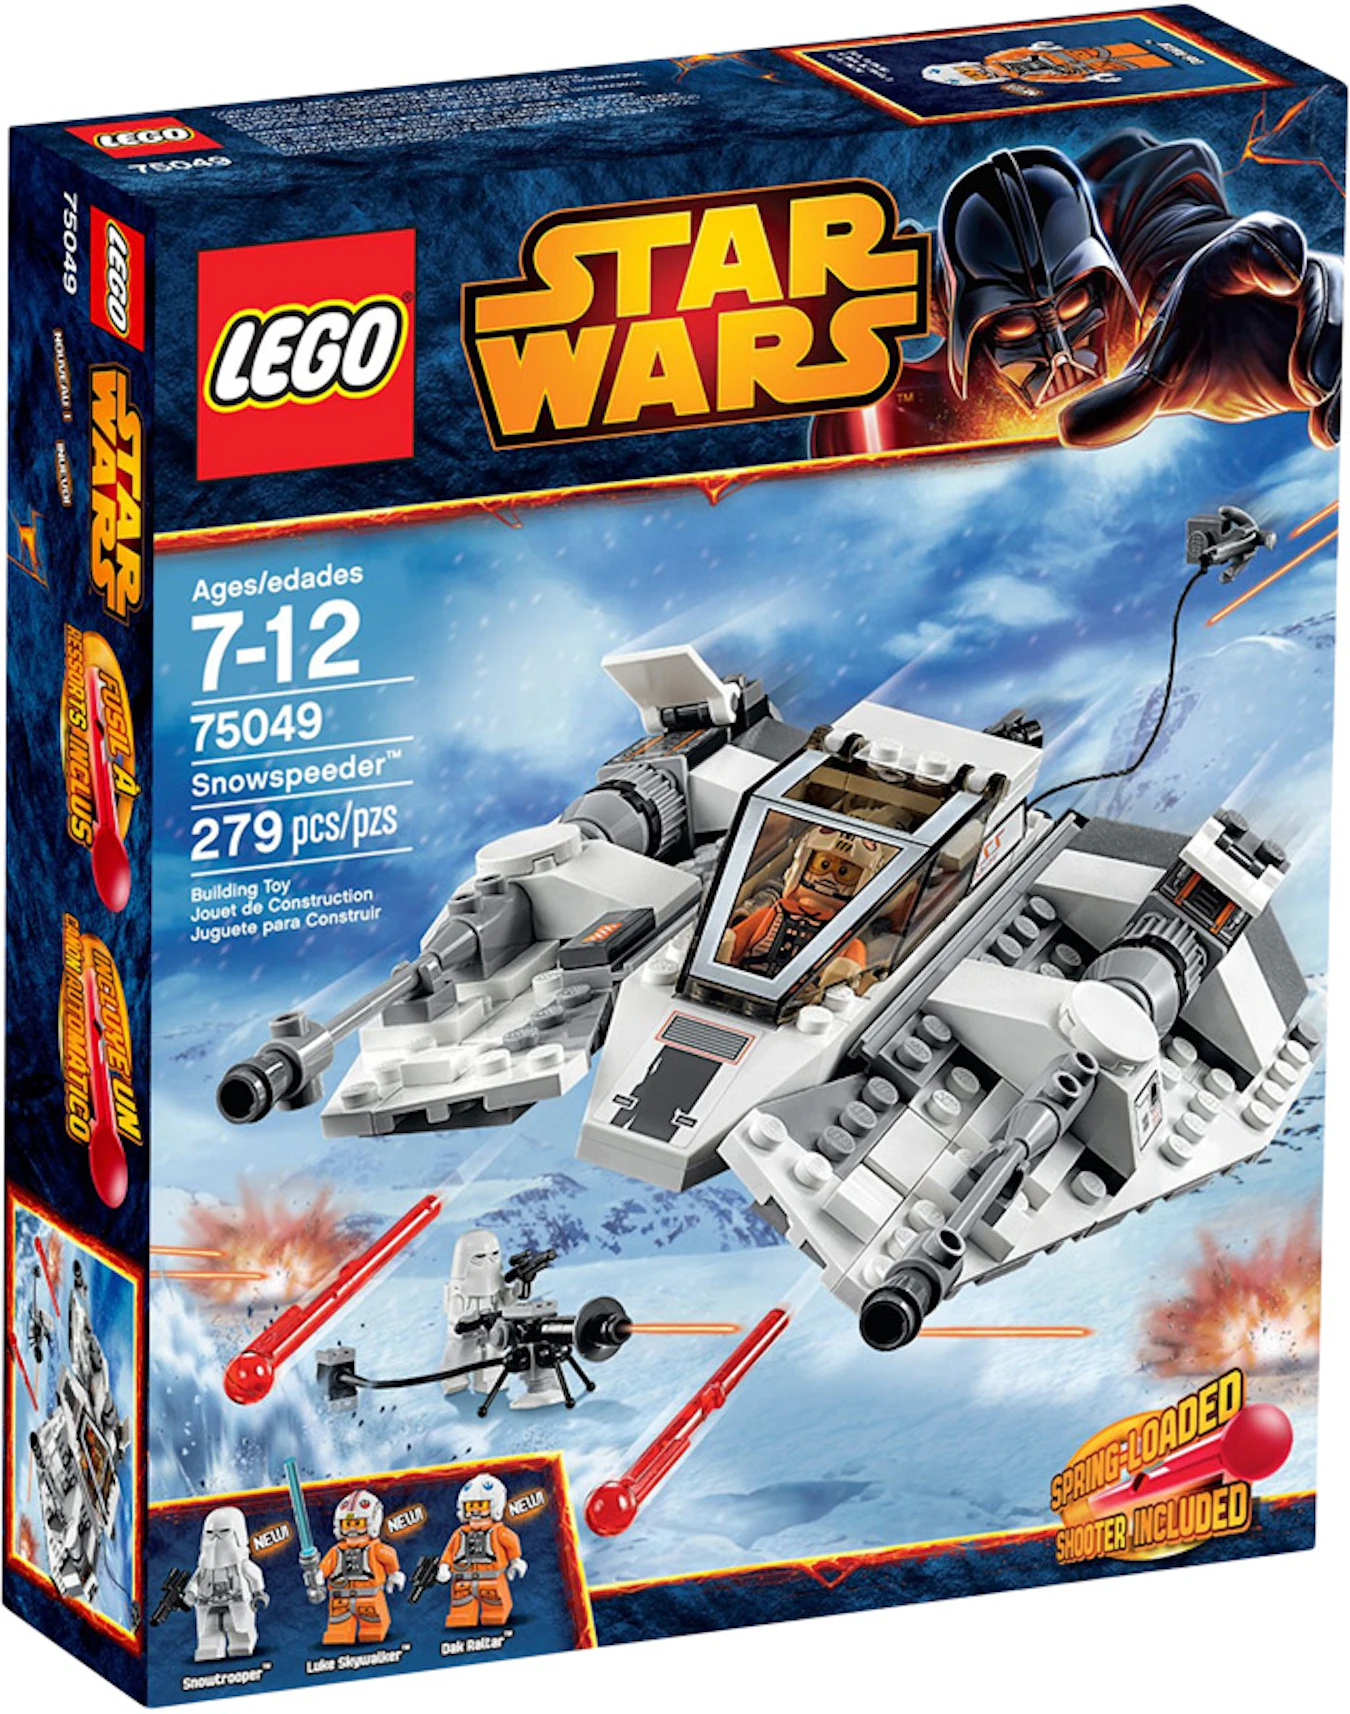 Chaise longue vezel Doe een poging LEGO Star Wars Snowspeeder Set 75049 - US